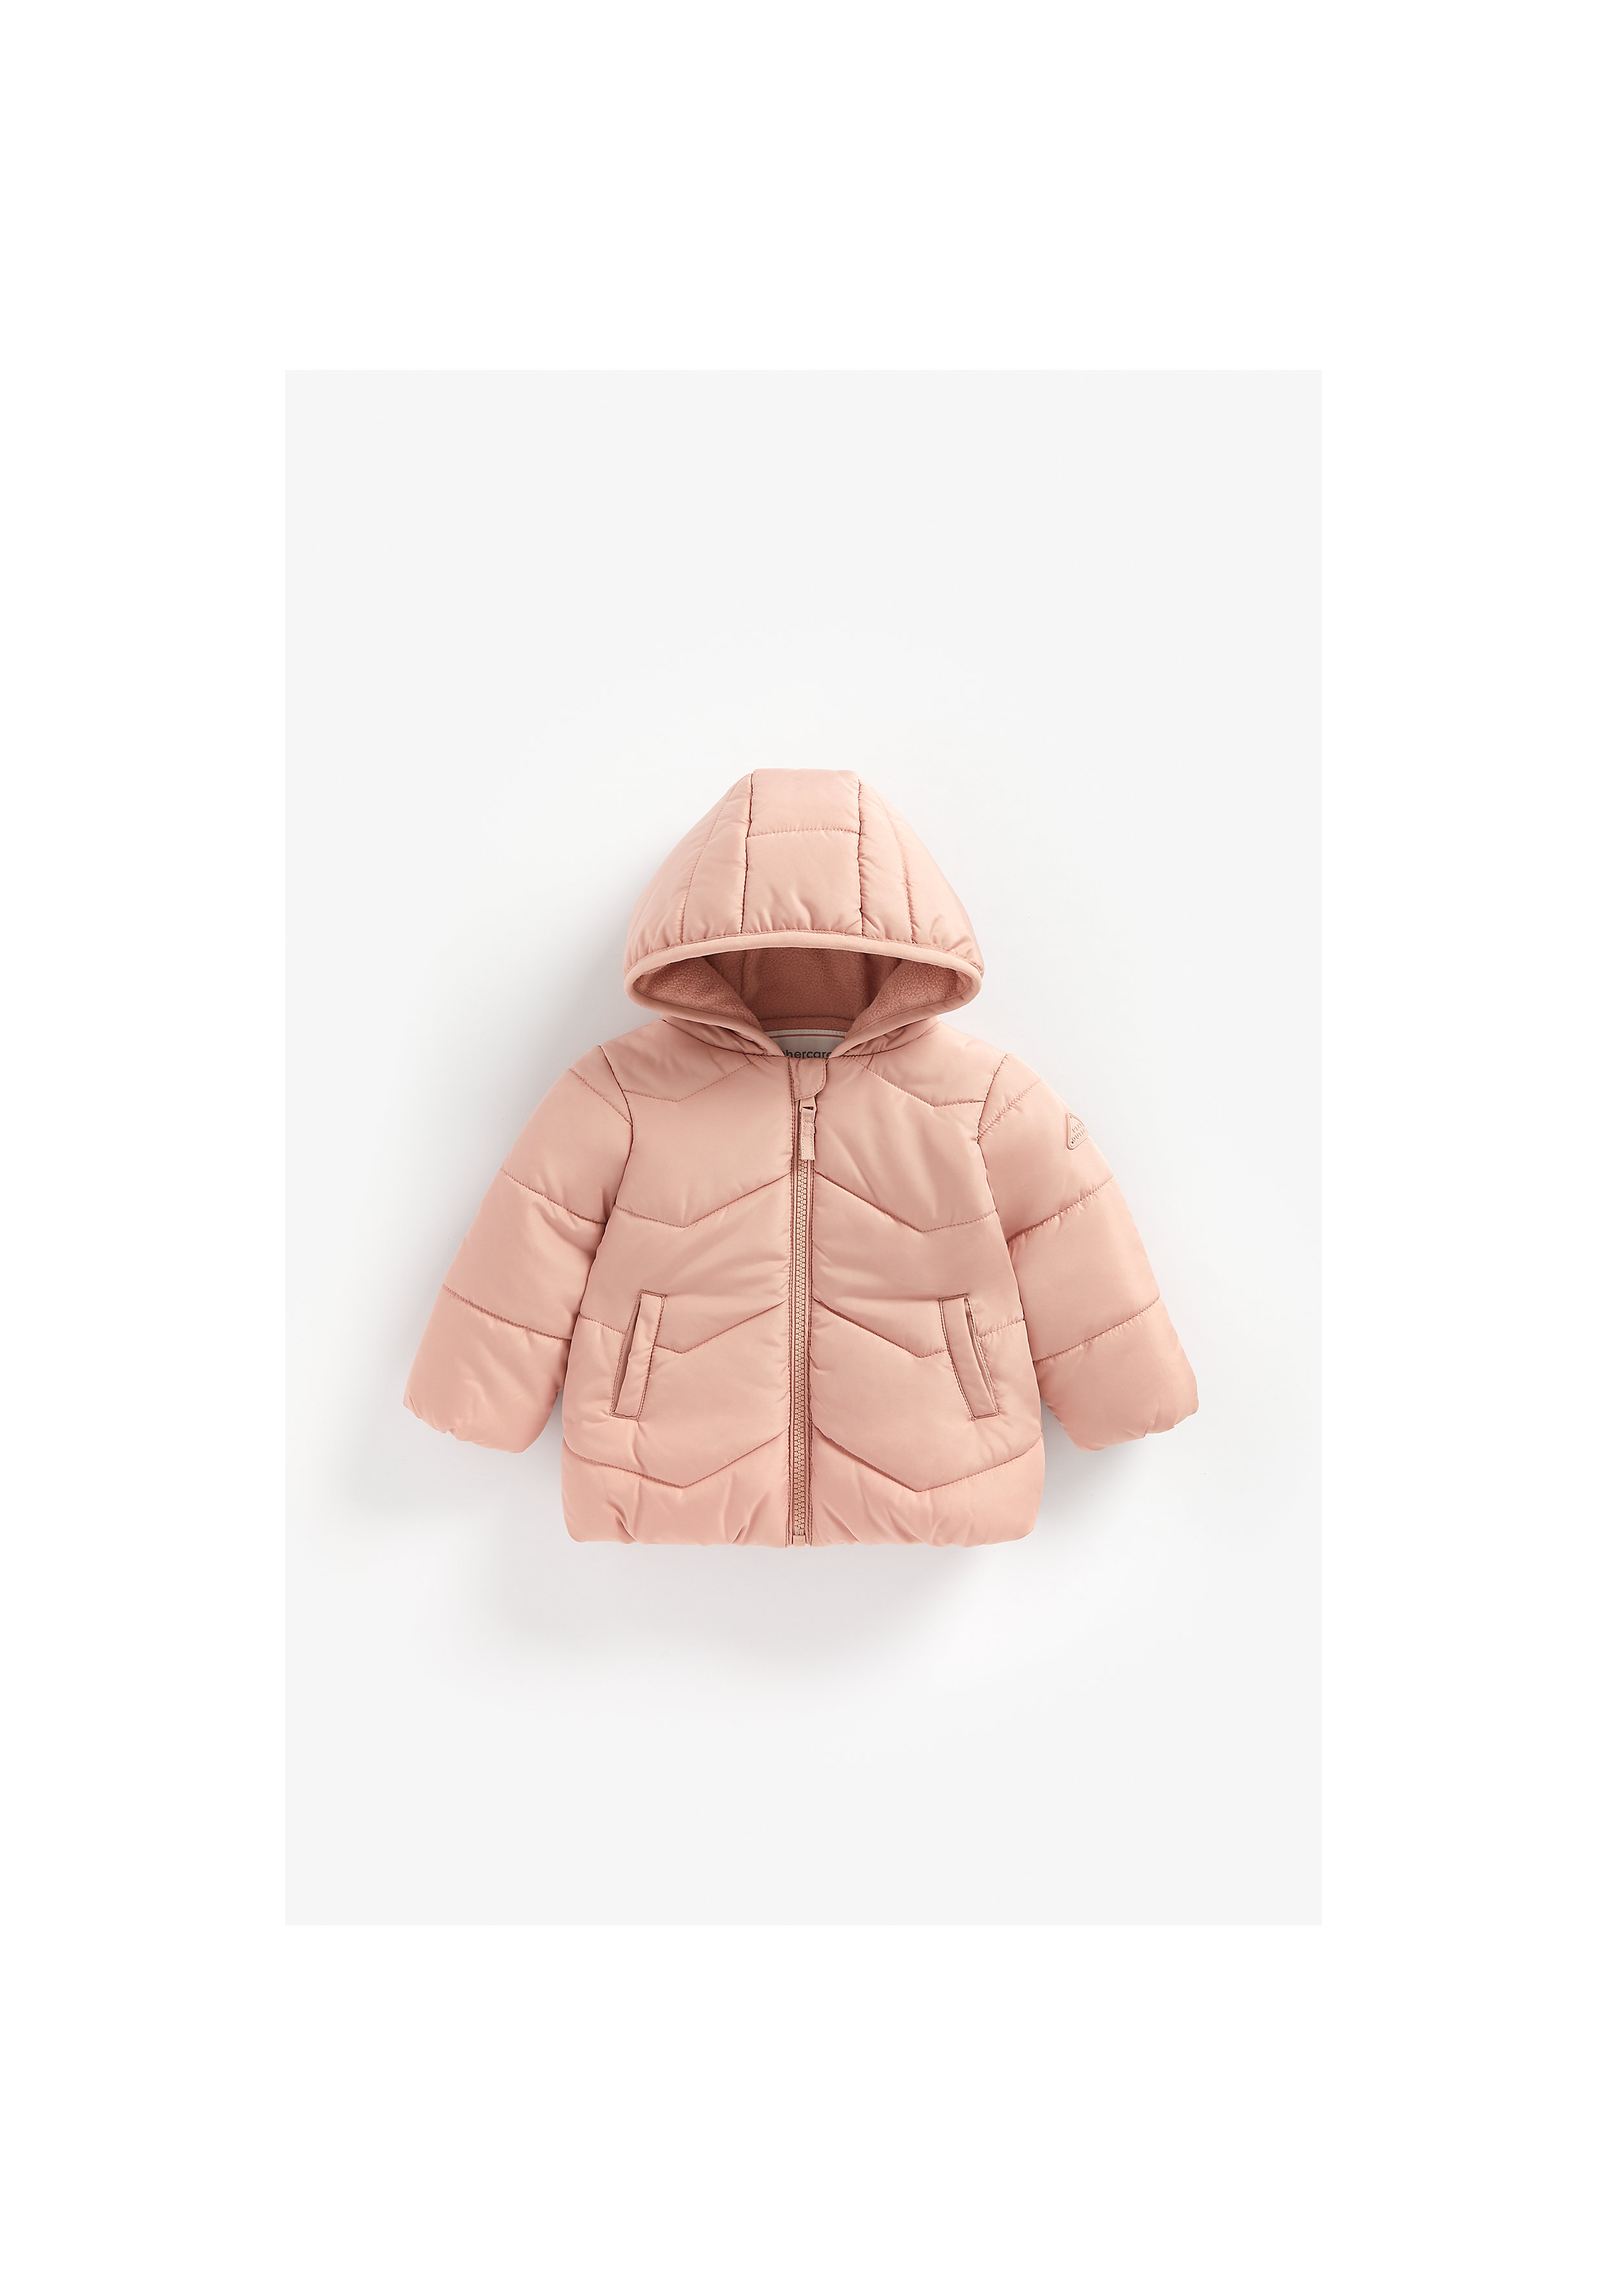 Mothercare | Girls Full Sleeves Fleece Lined Jacket Hooded - Pink